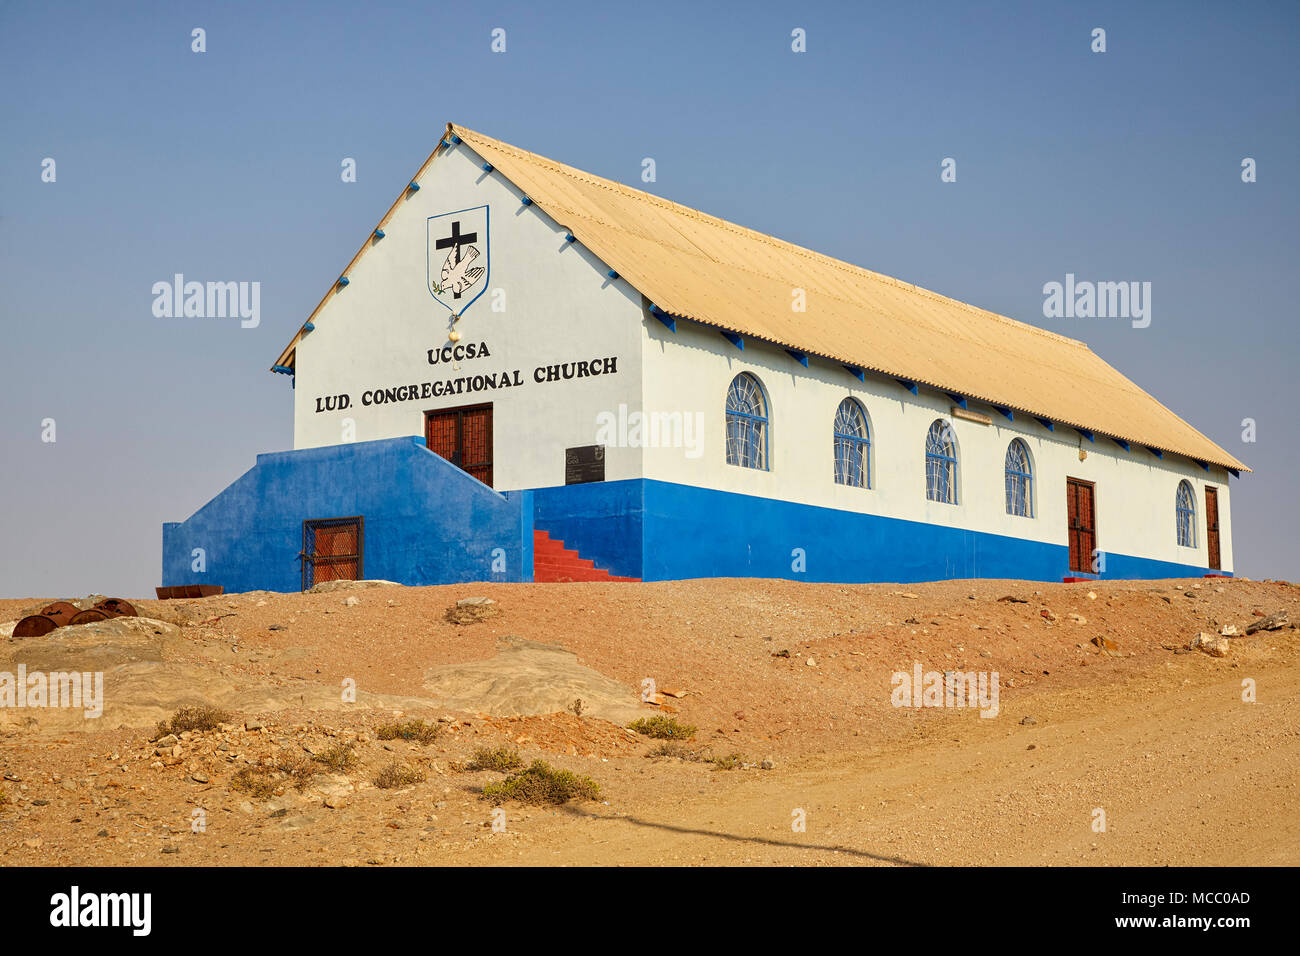 UCCSA Luderitz Congregational Church in Luderitz, Namibia, Africa Stock Photo